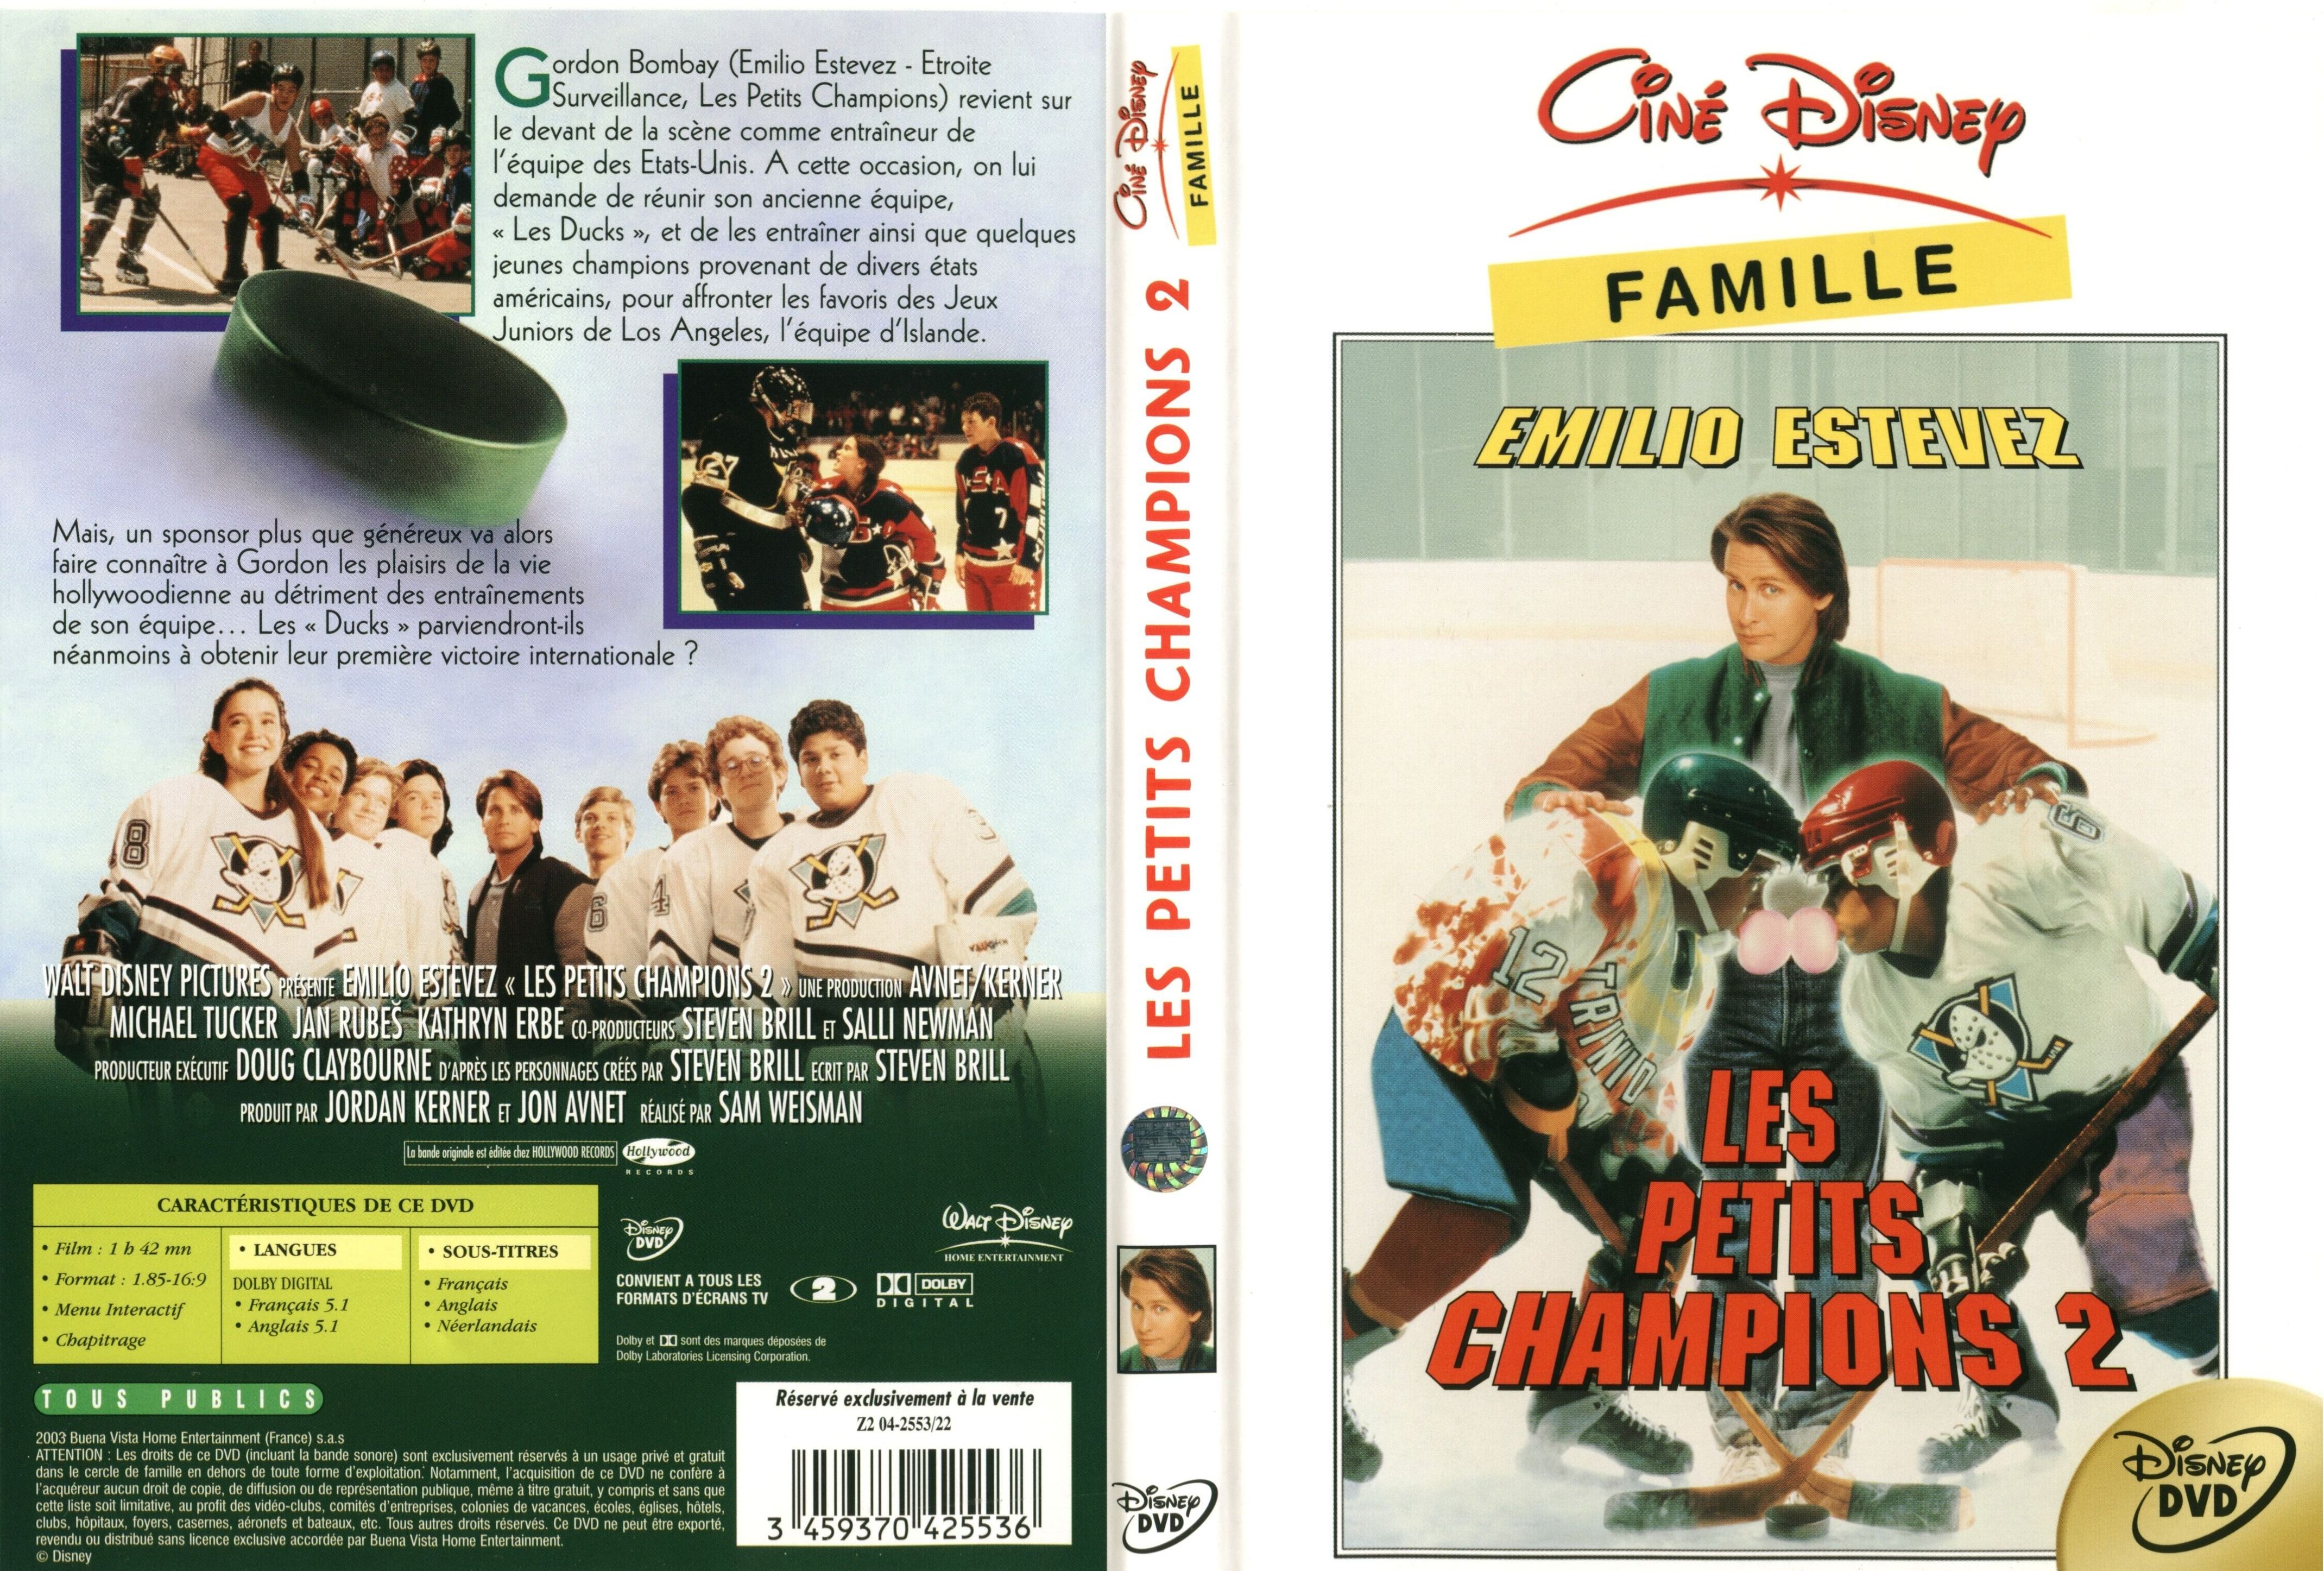 Jaquette DVD Les petits champions 2